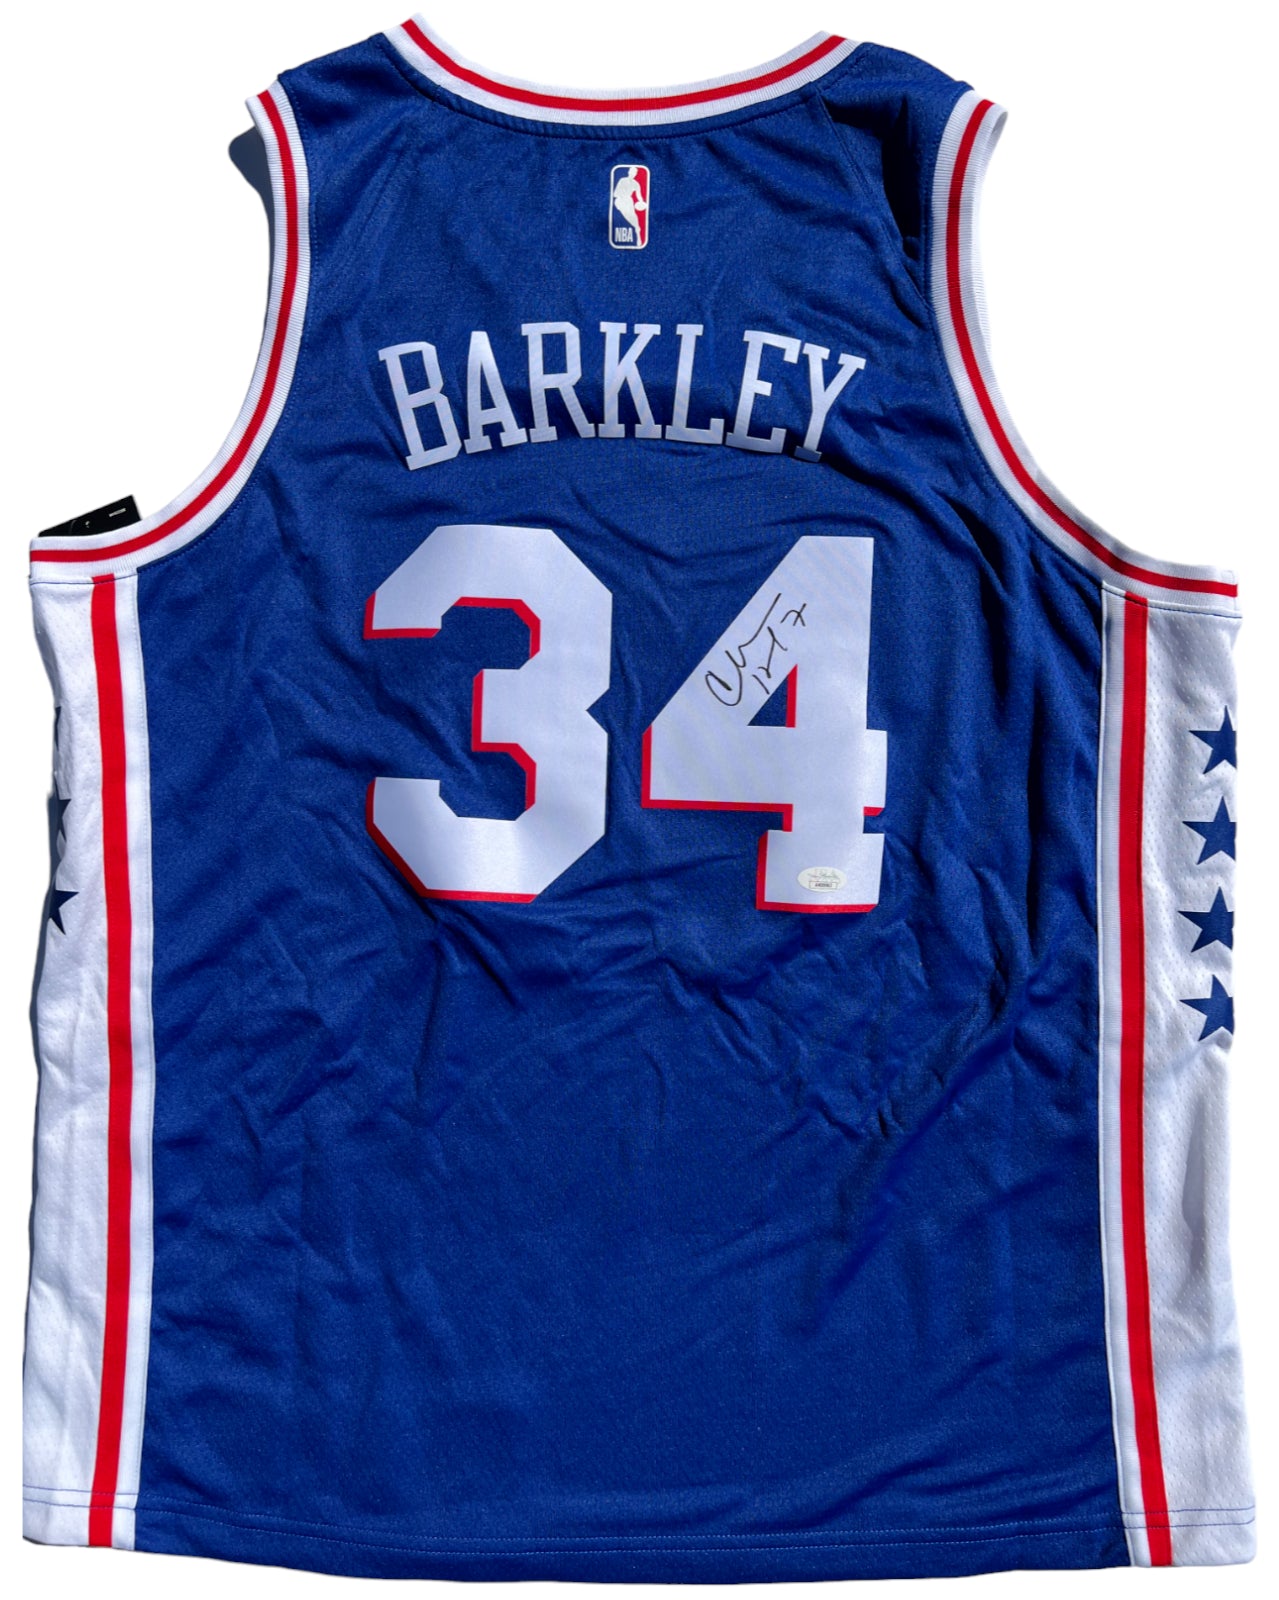 barkley basketball jersey